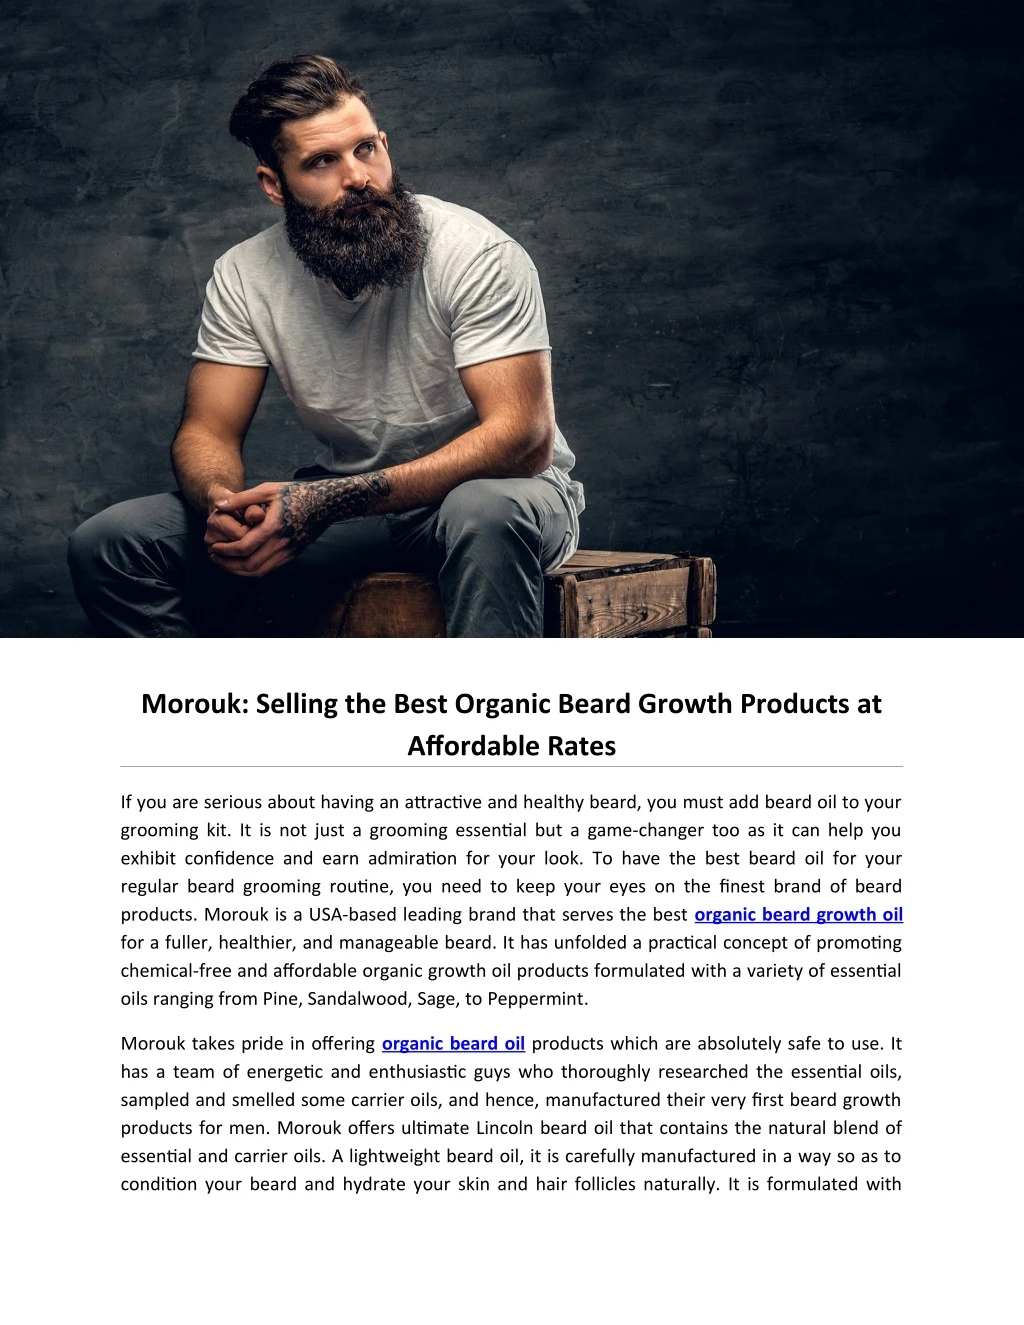 morouk selling the best organic beard growth